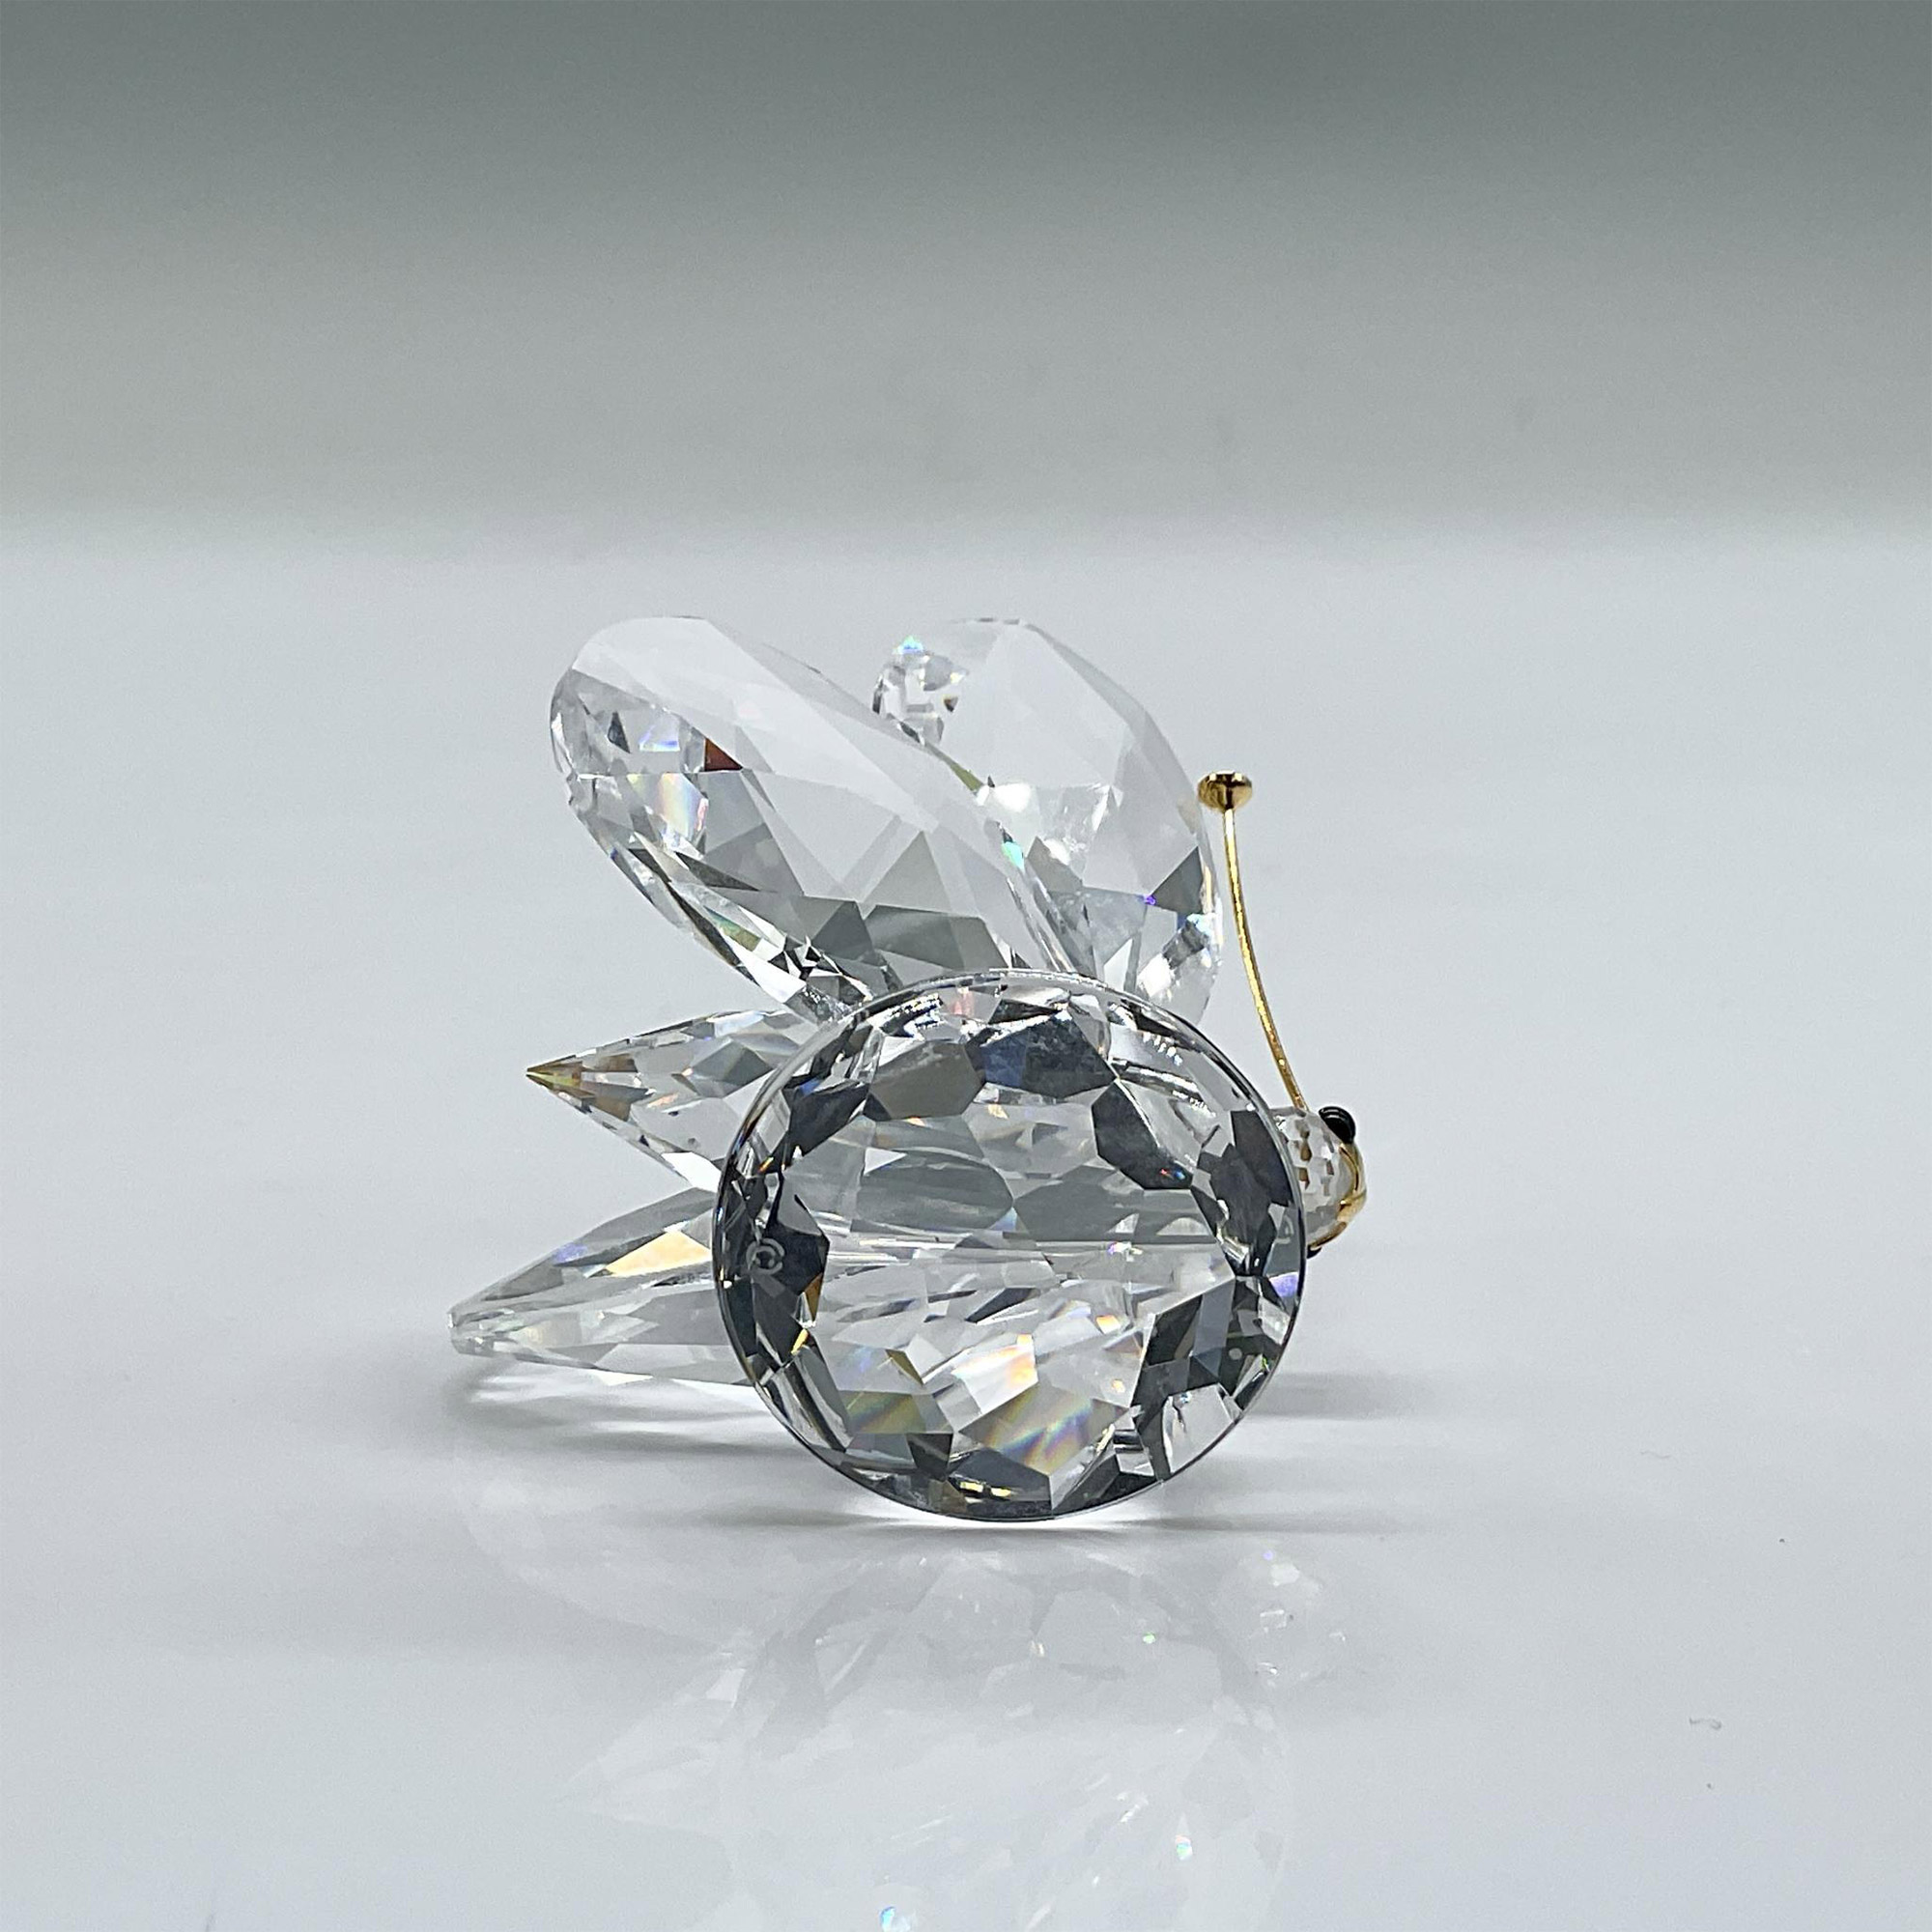 Swarovski Crystal Figurine, Butterfly - Image 4 of 5